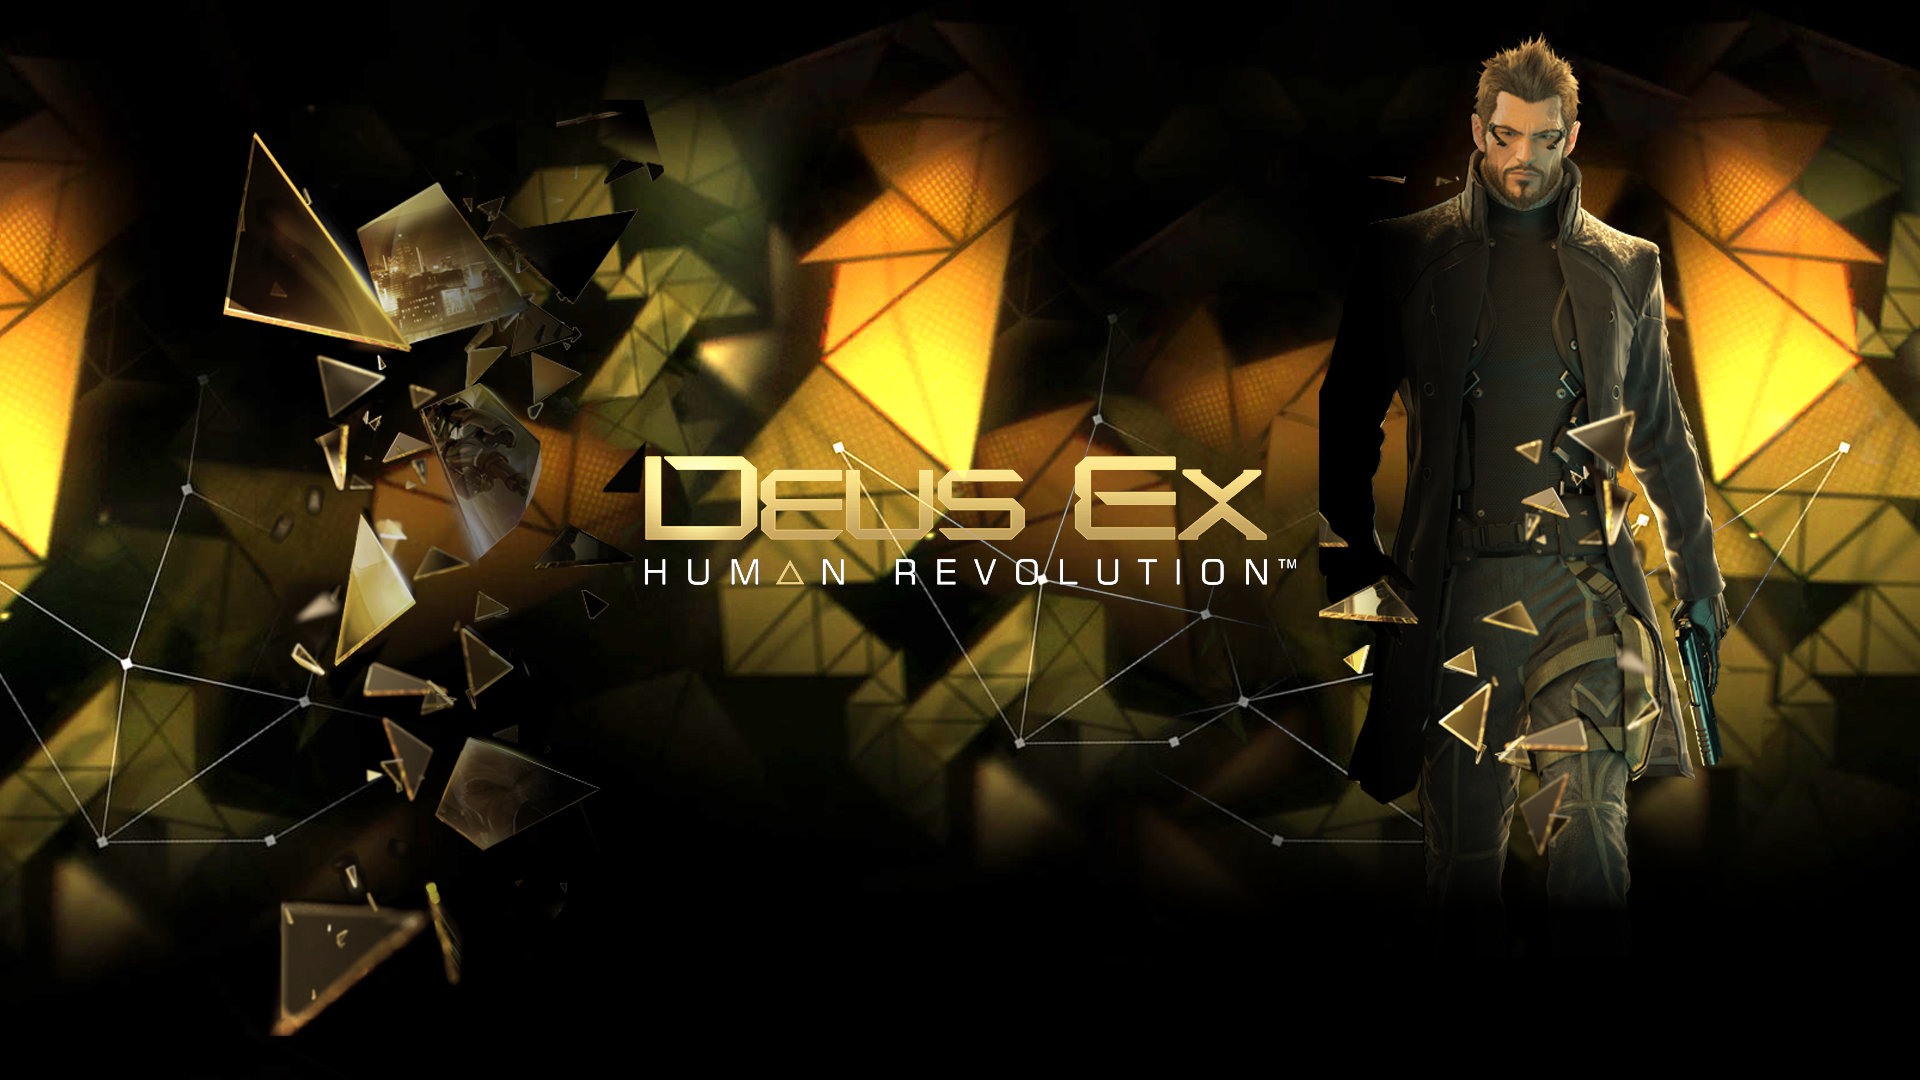 Deus Ex: Human Revolution Backgrounds on Wallpapers Vista